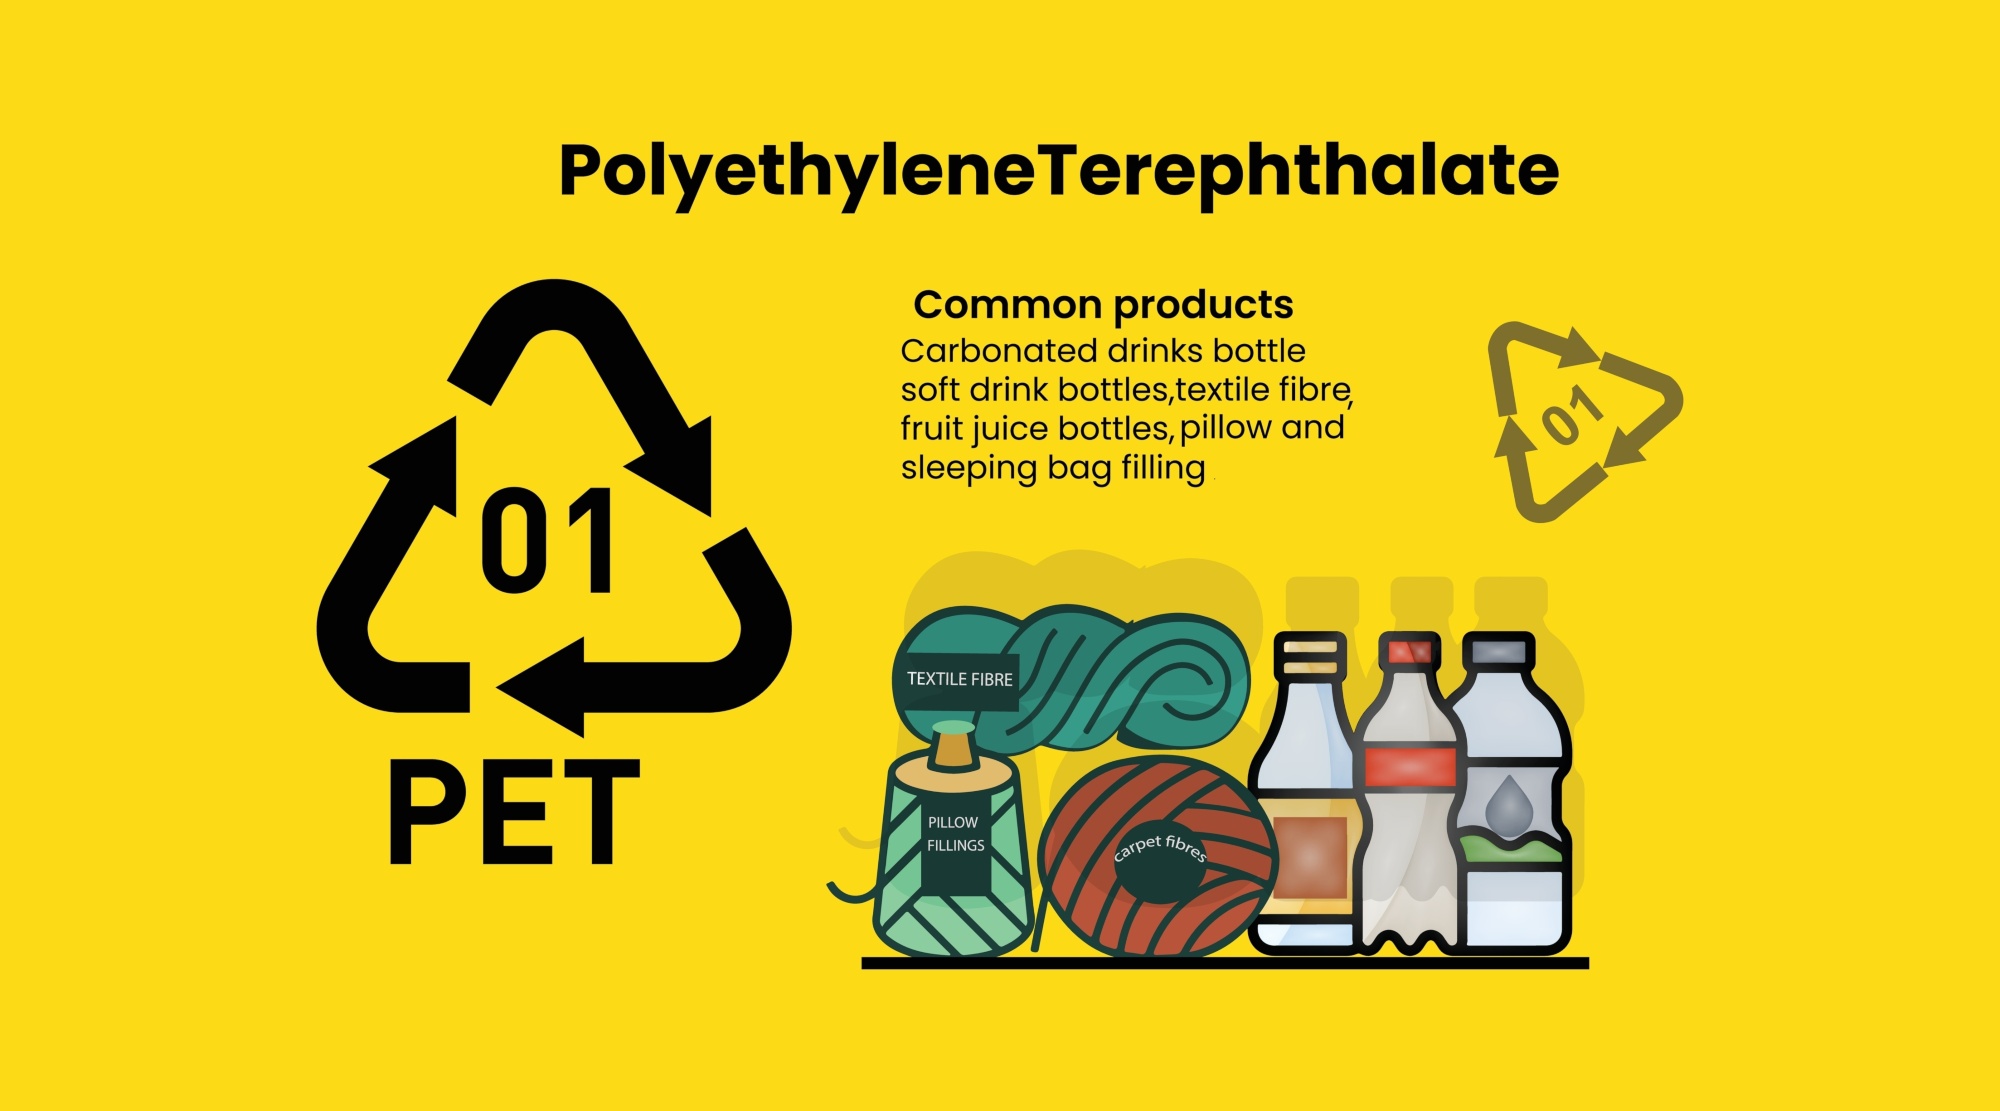 PolyethyleneTerephthalate common products info